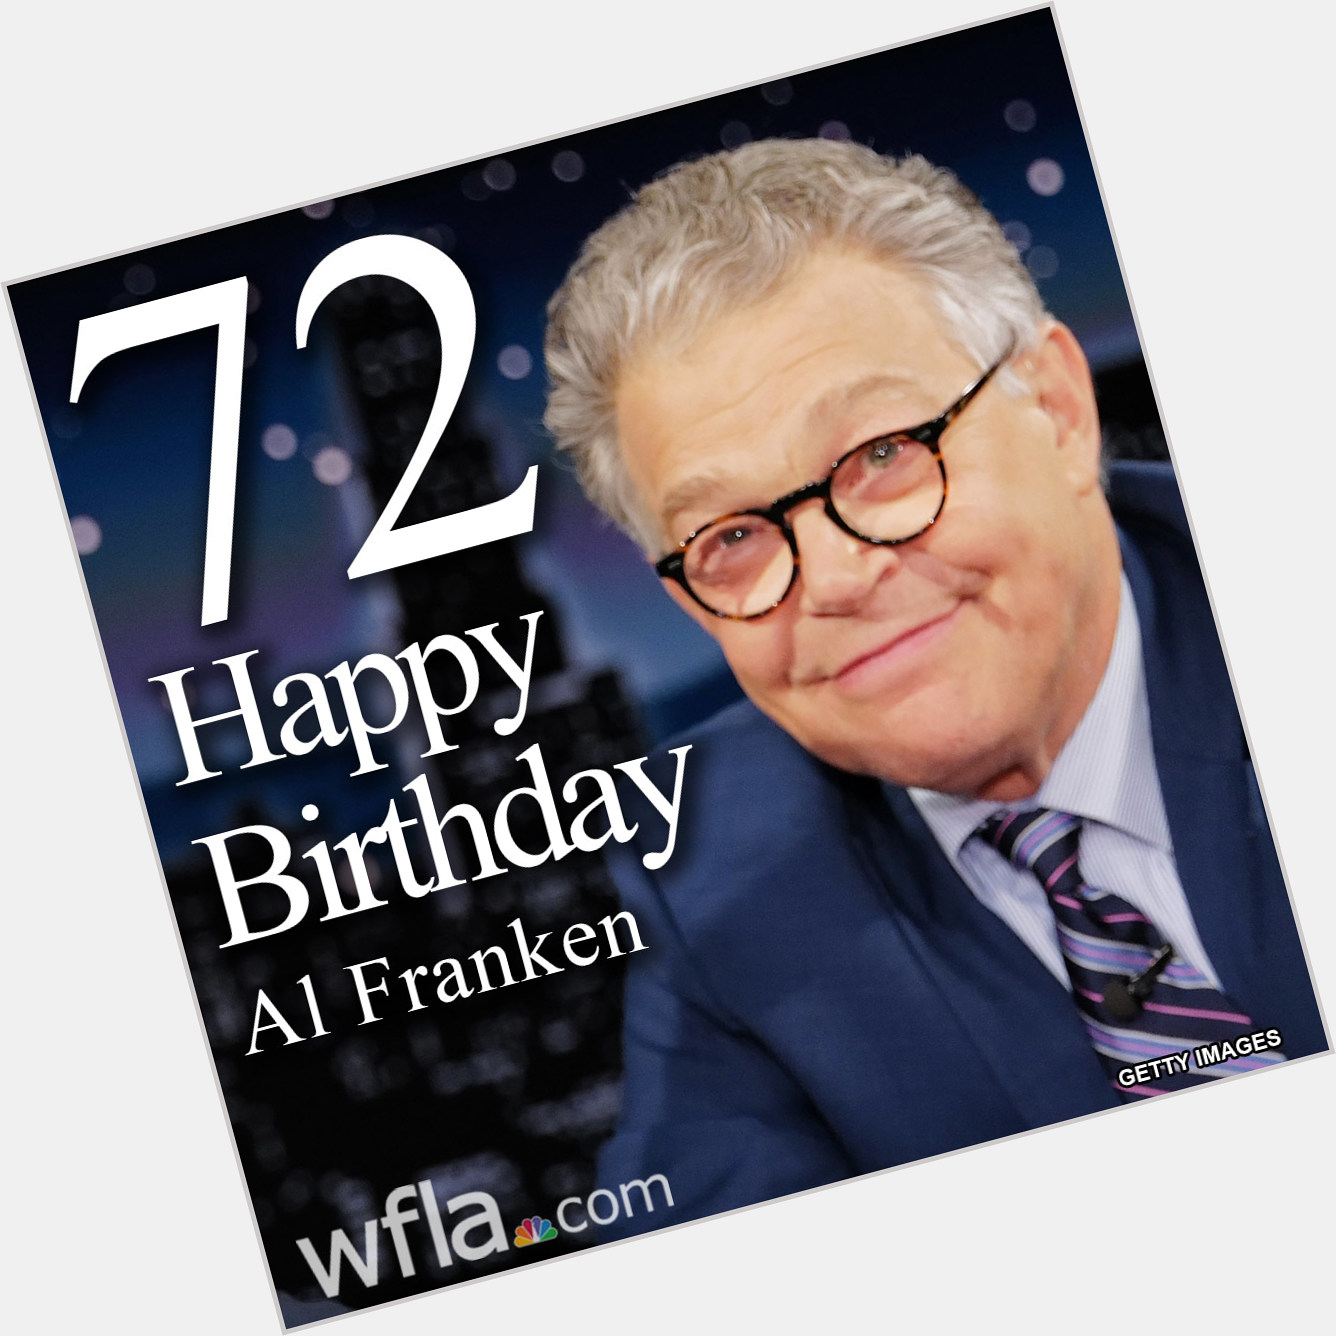 HAPPY BIRTHDAY AL! Former SNL performer and U.S. Senator Al Franken is 72 today.  